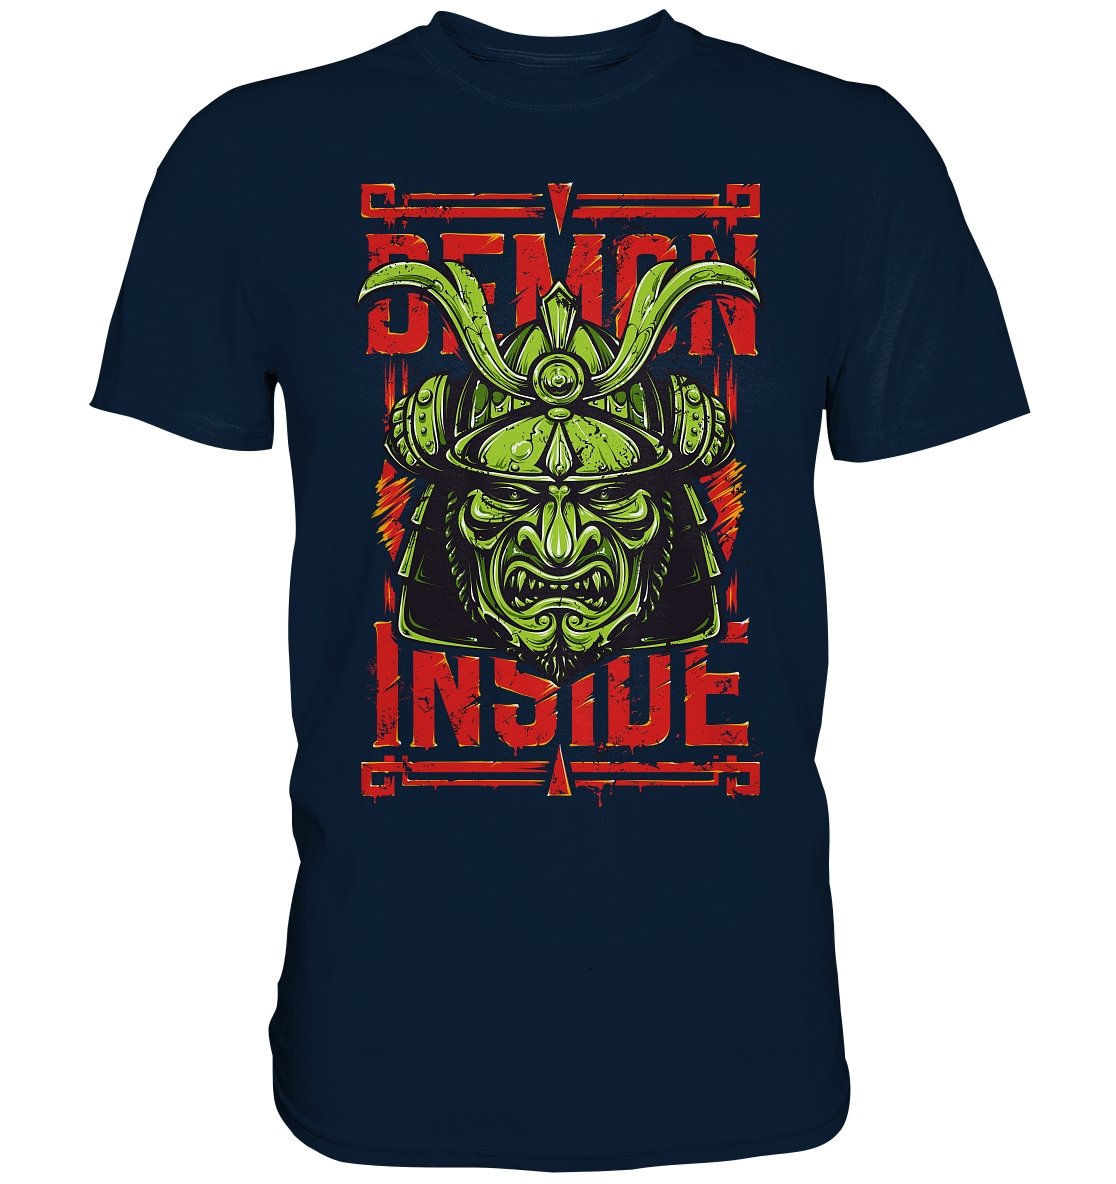 Demon Inside - Premium Shirt - BINYA